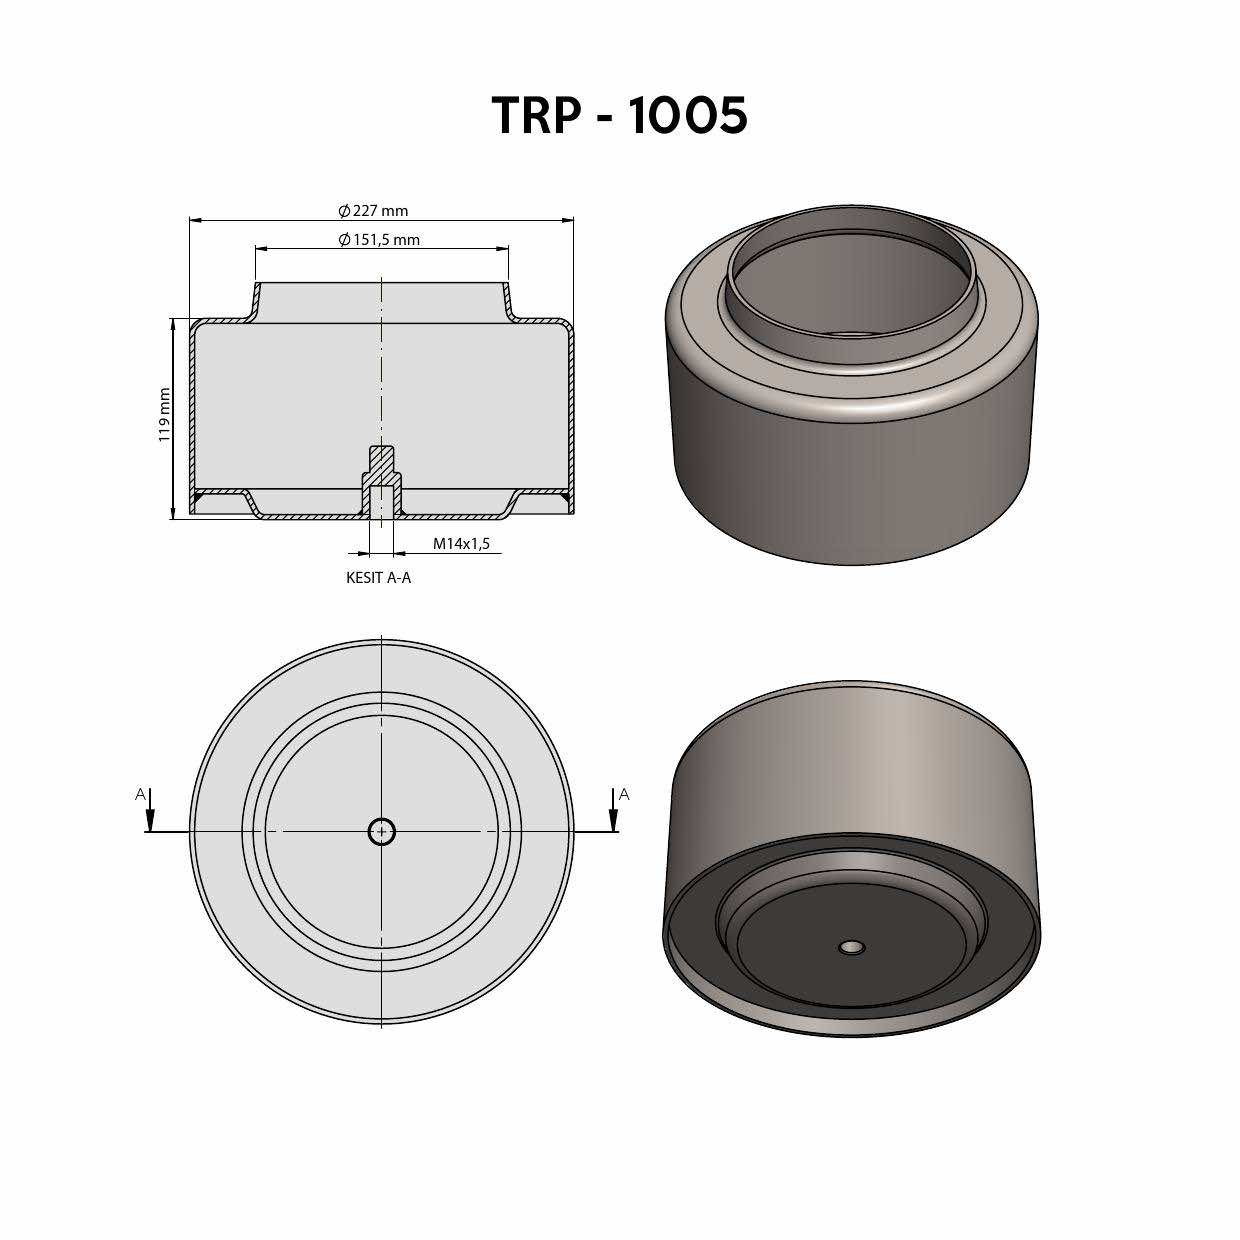 TRP-1005